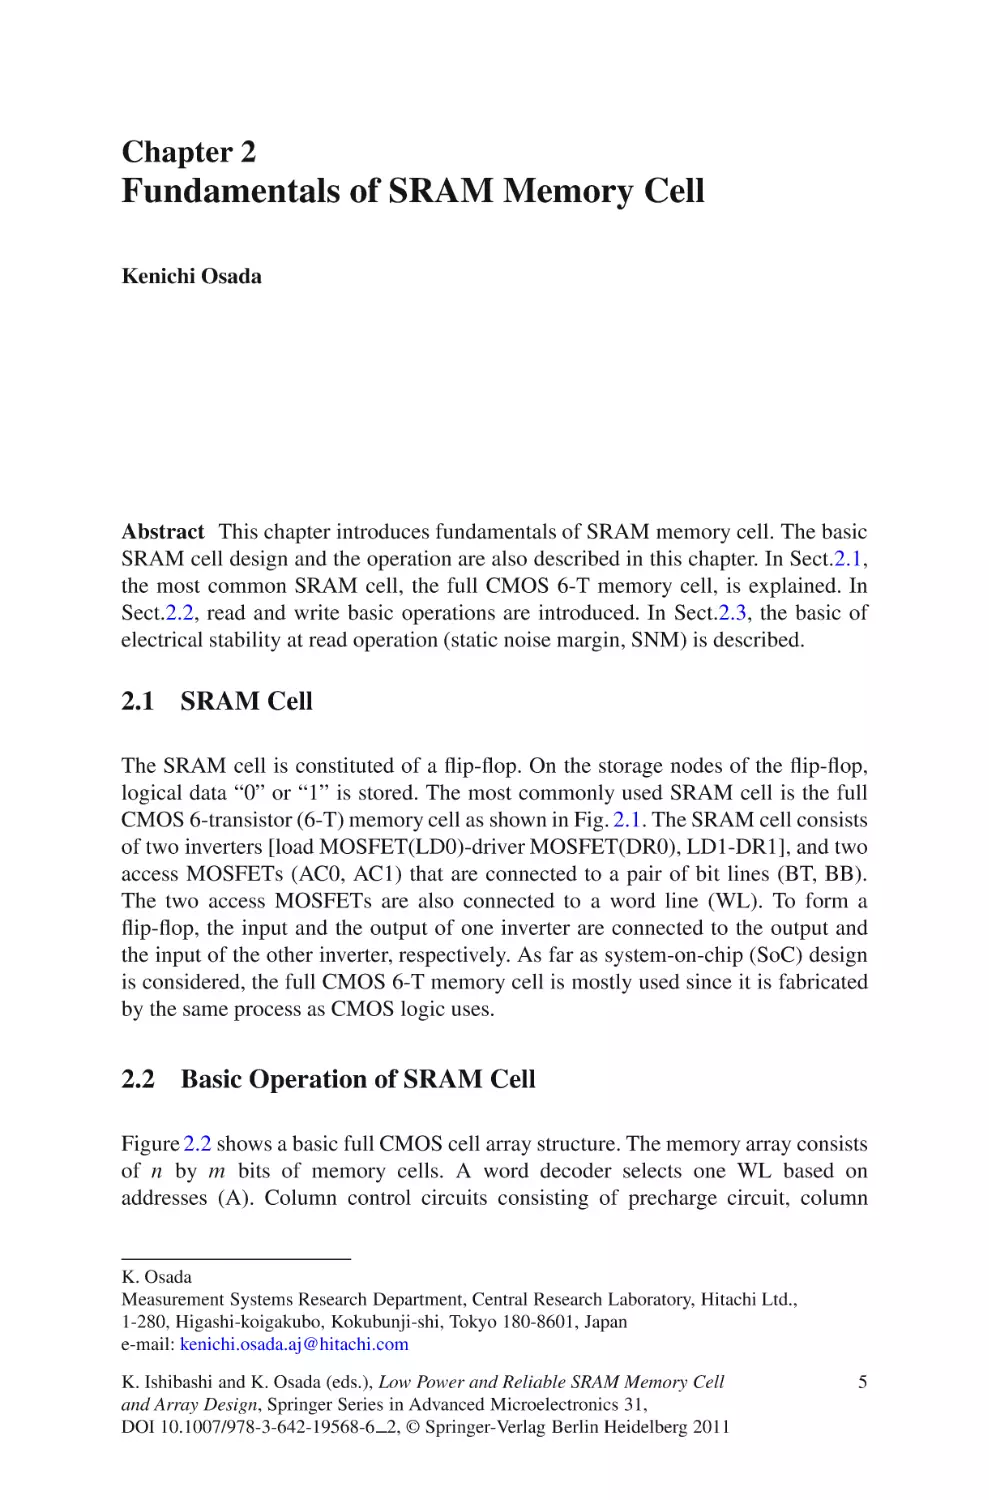 fulltext(1)
Chapter 2
2.1 SRAM Cell
2.2 Basic Operation of SRAM Cell